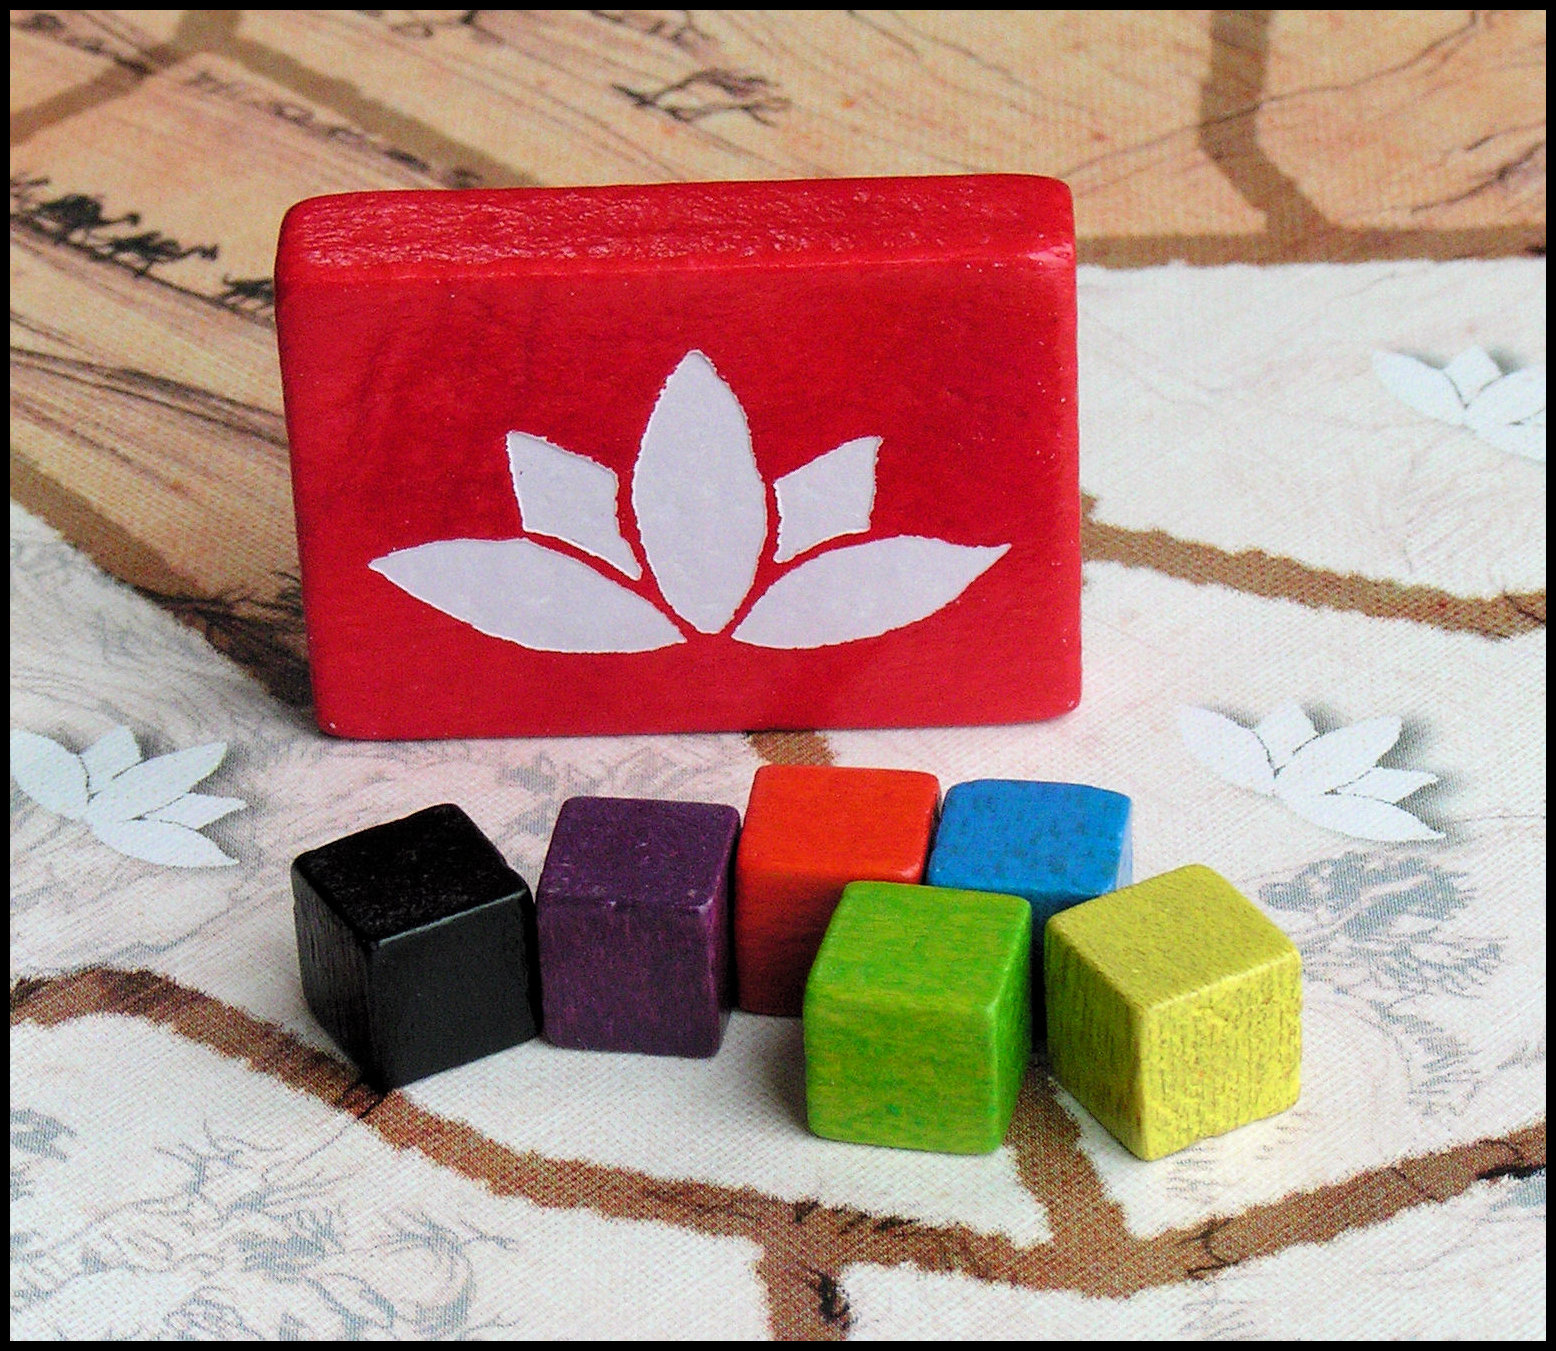 Der Weisse Lotus - White Lotus And Player Cubes